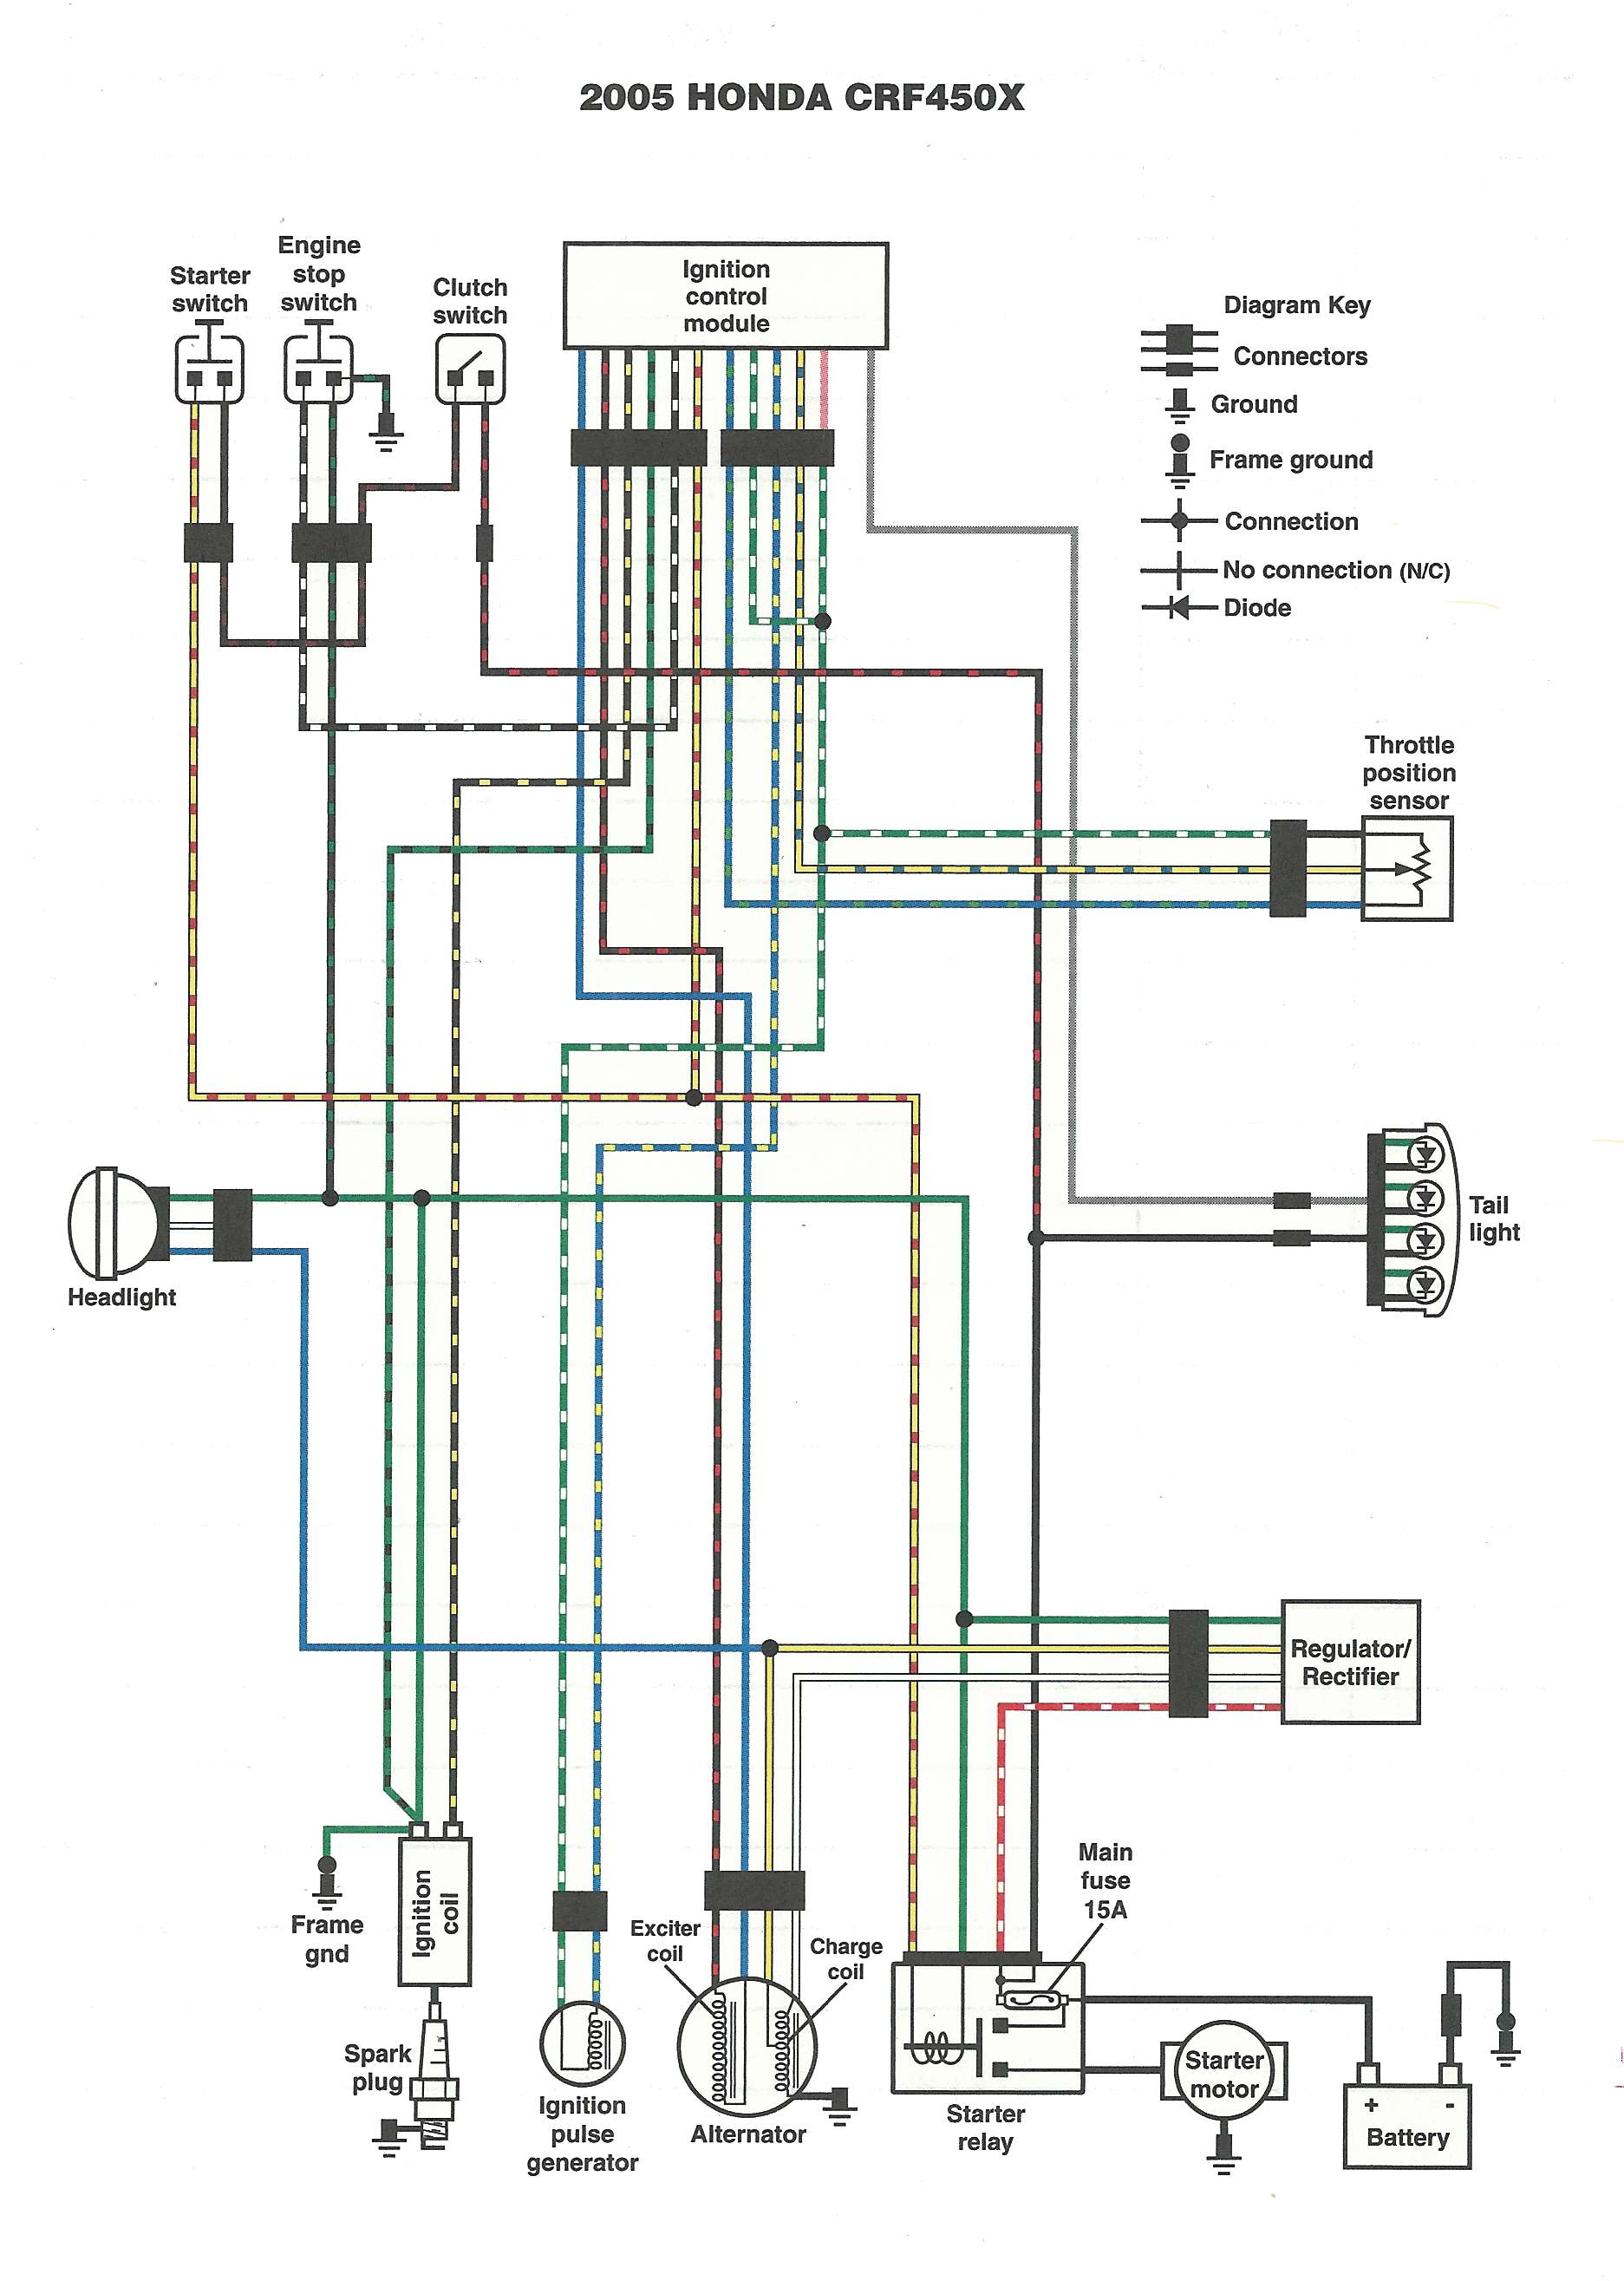 Diagram Smpte Wiring Diagram Full Version Hd Quality Wiring Diagram Diagrambeachz Babelemoda It